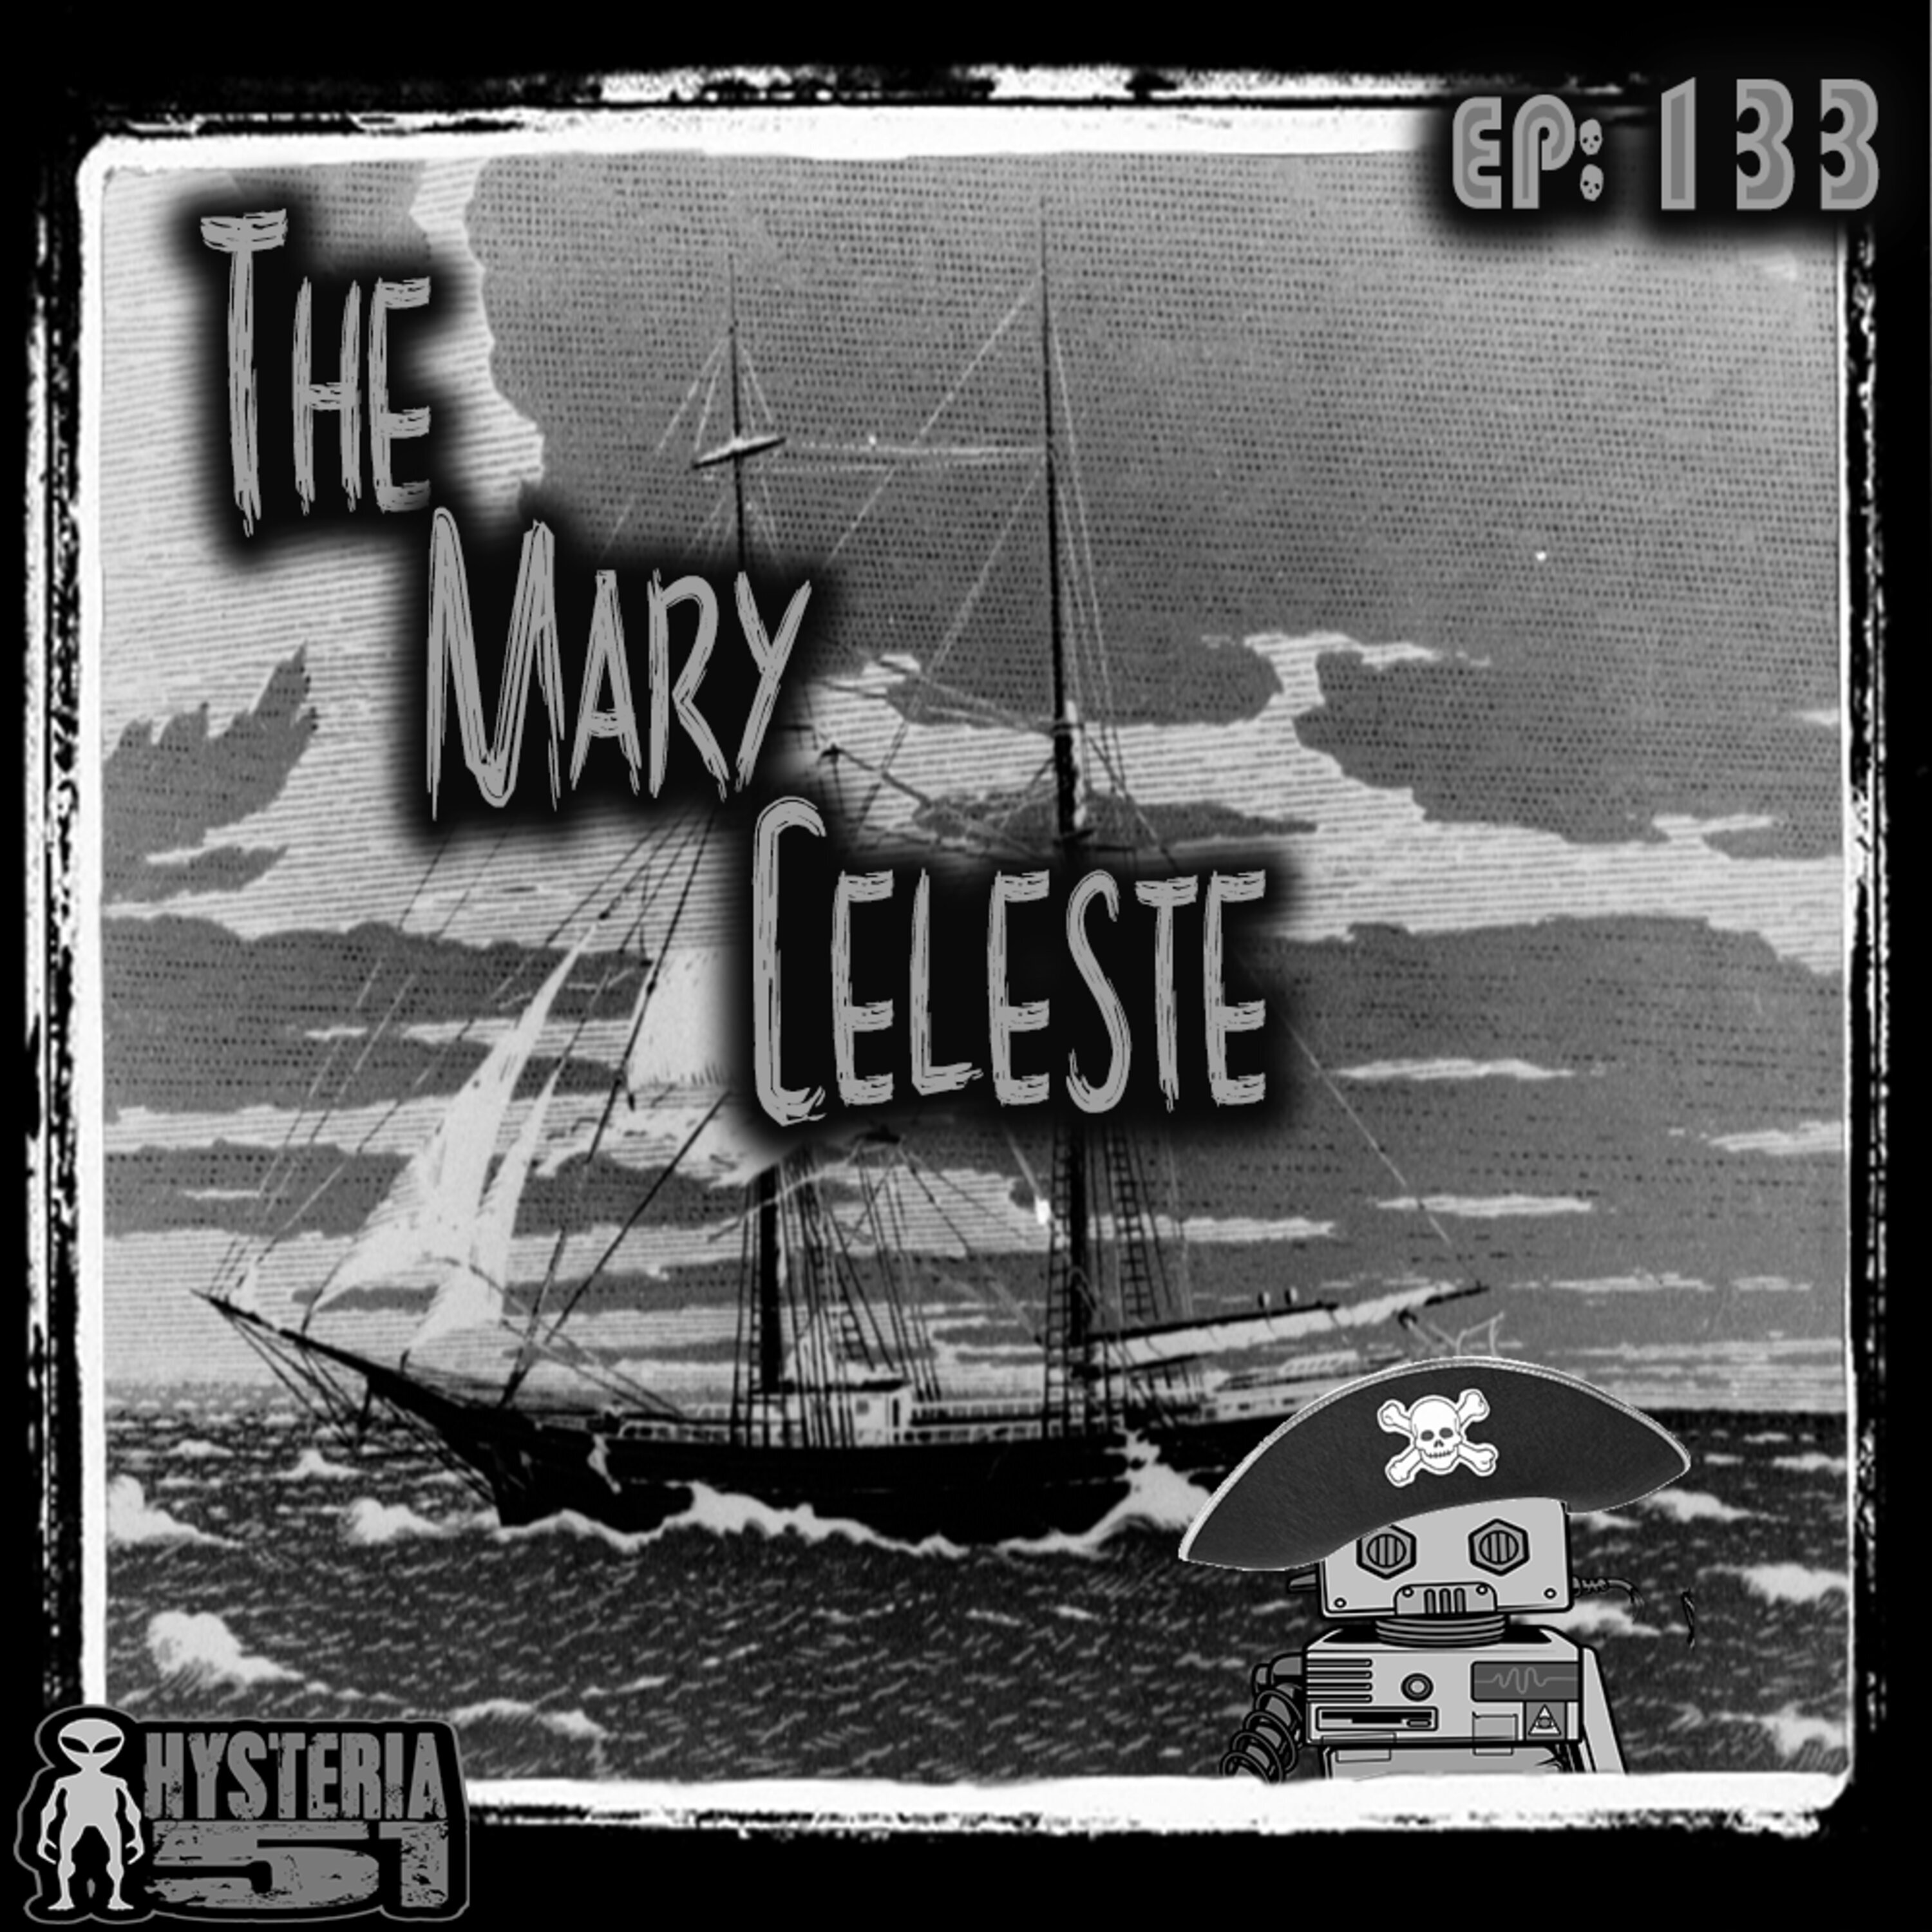 The Mary Celeste | 133 Image